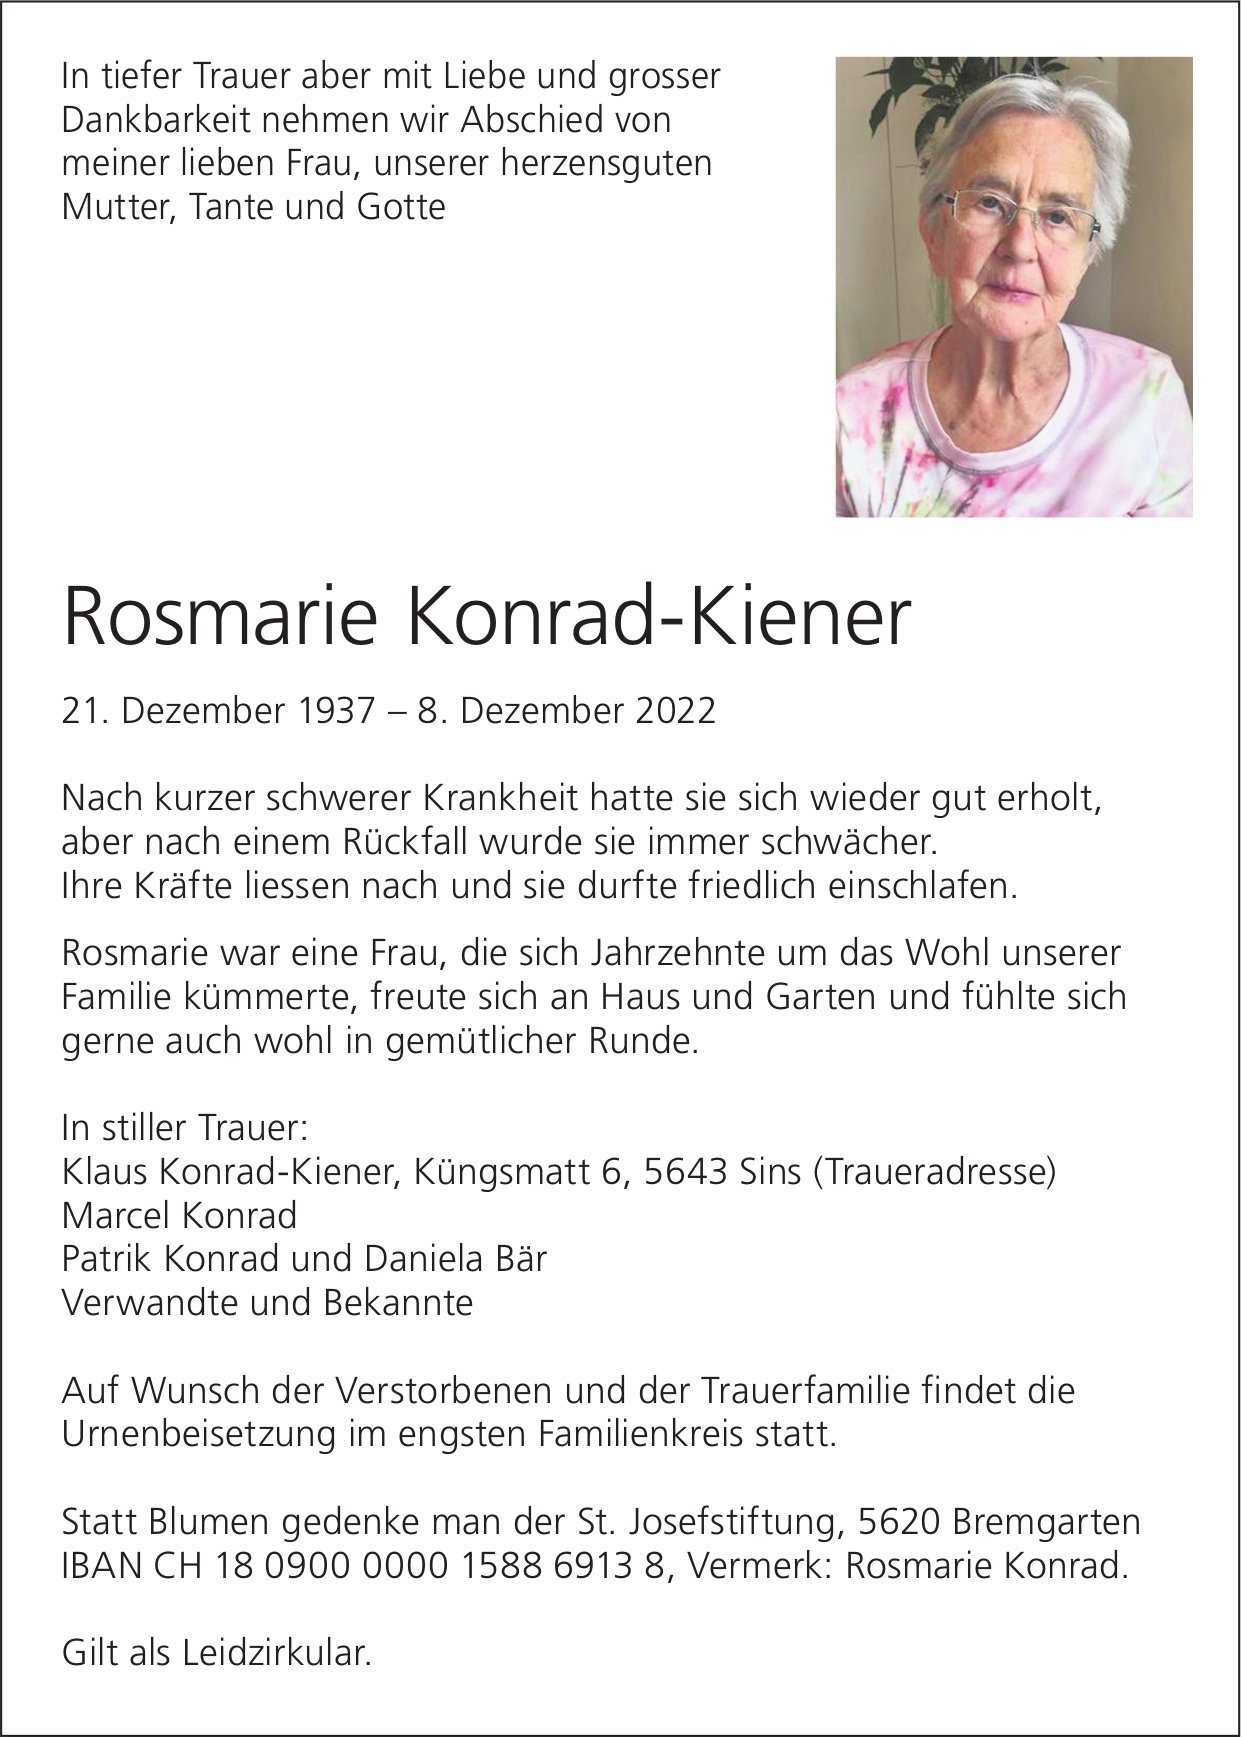 Konrad-Kiener Rosmarie, Dezember 2022 / TA